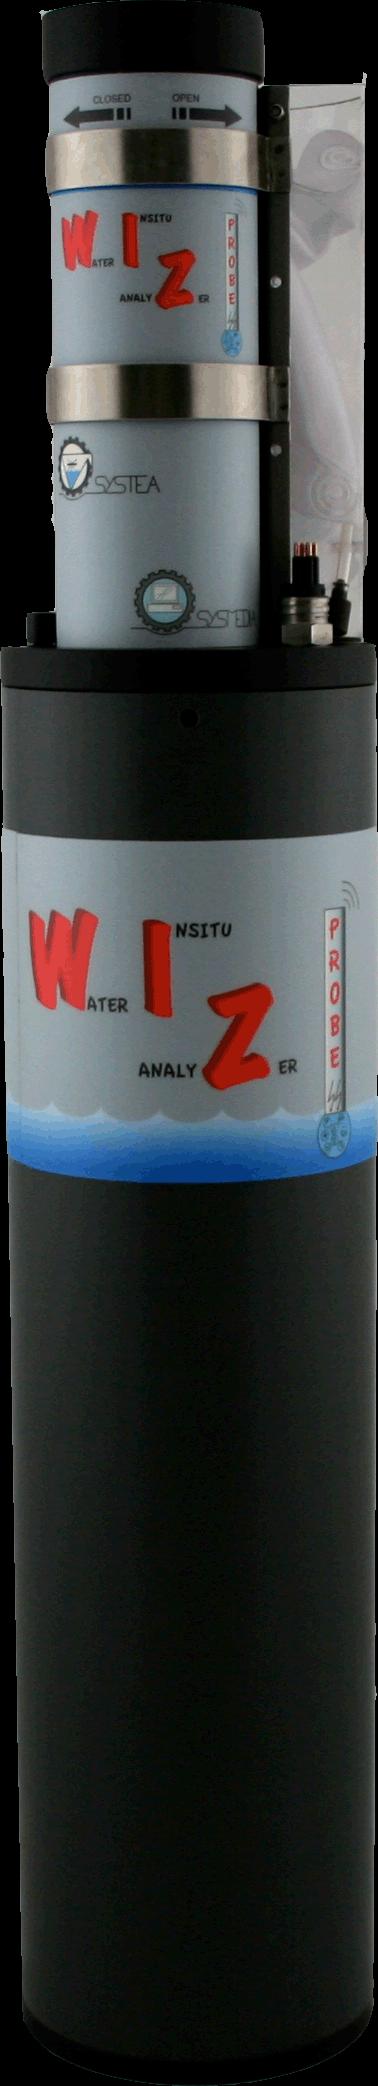 The WIZ system Miniaturized wet chemistry Won EPA Nutrient Sensor Challenge Relatively affordable (1-15k;